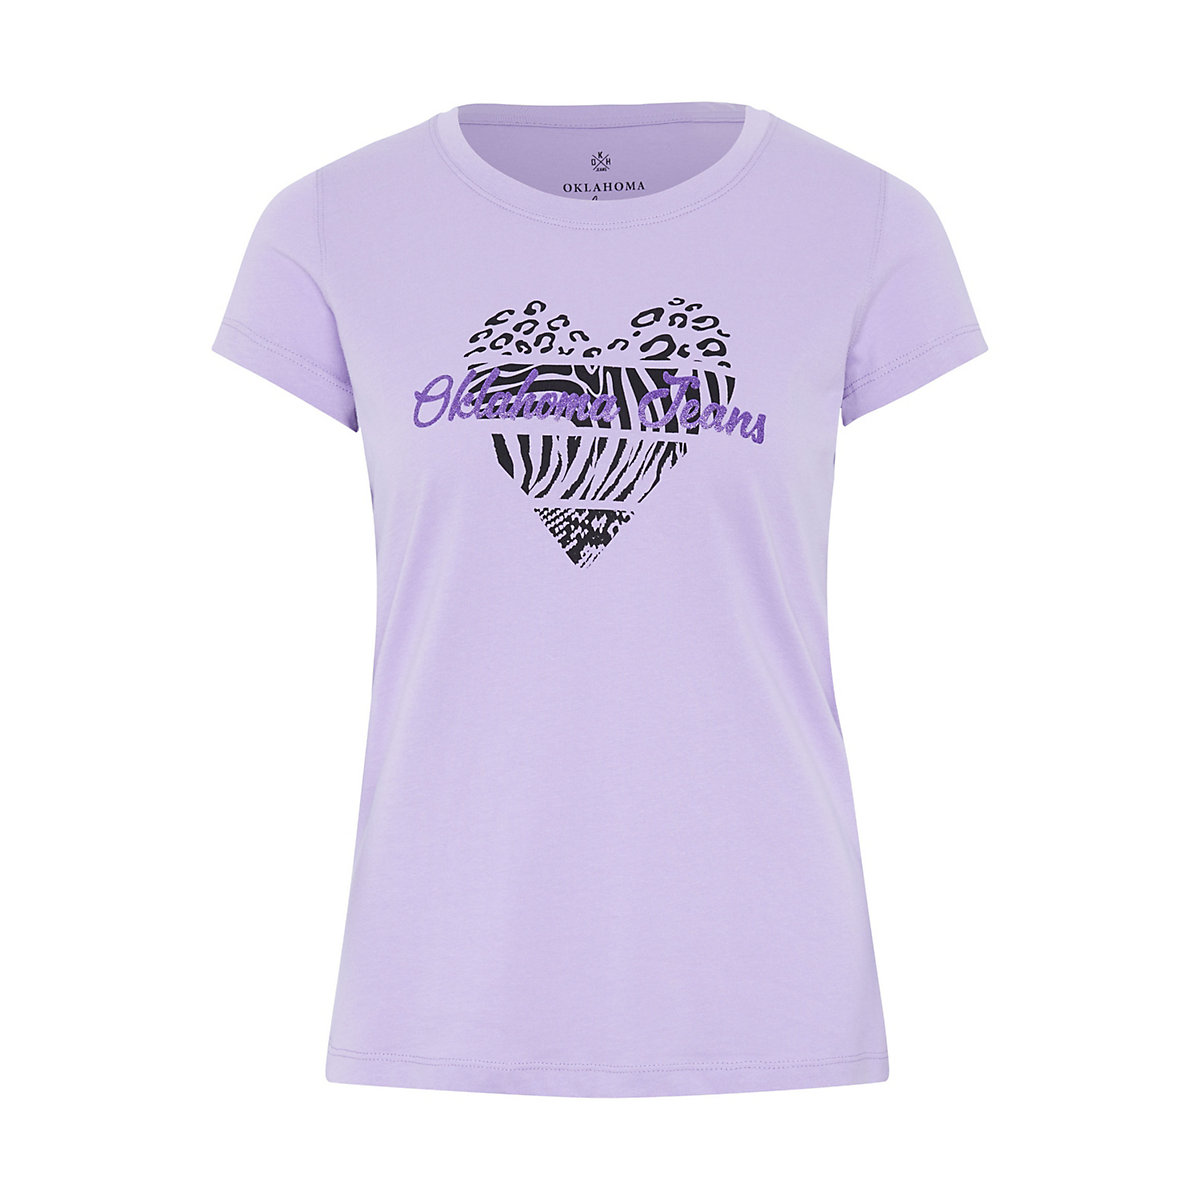 OKLAHOMA Jeans T-Shirt mit Herz-Motiv und Logo-Schriftzug T-Shirts lila